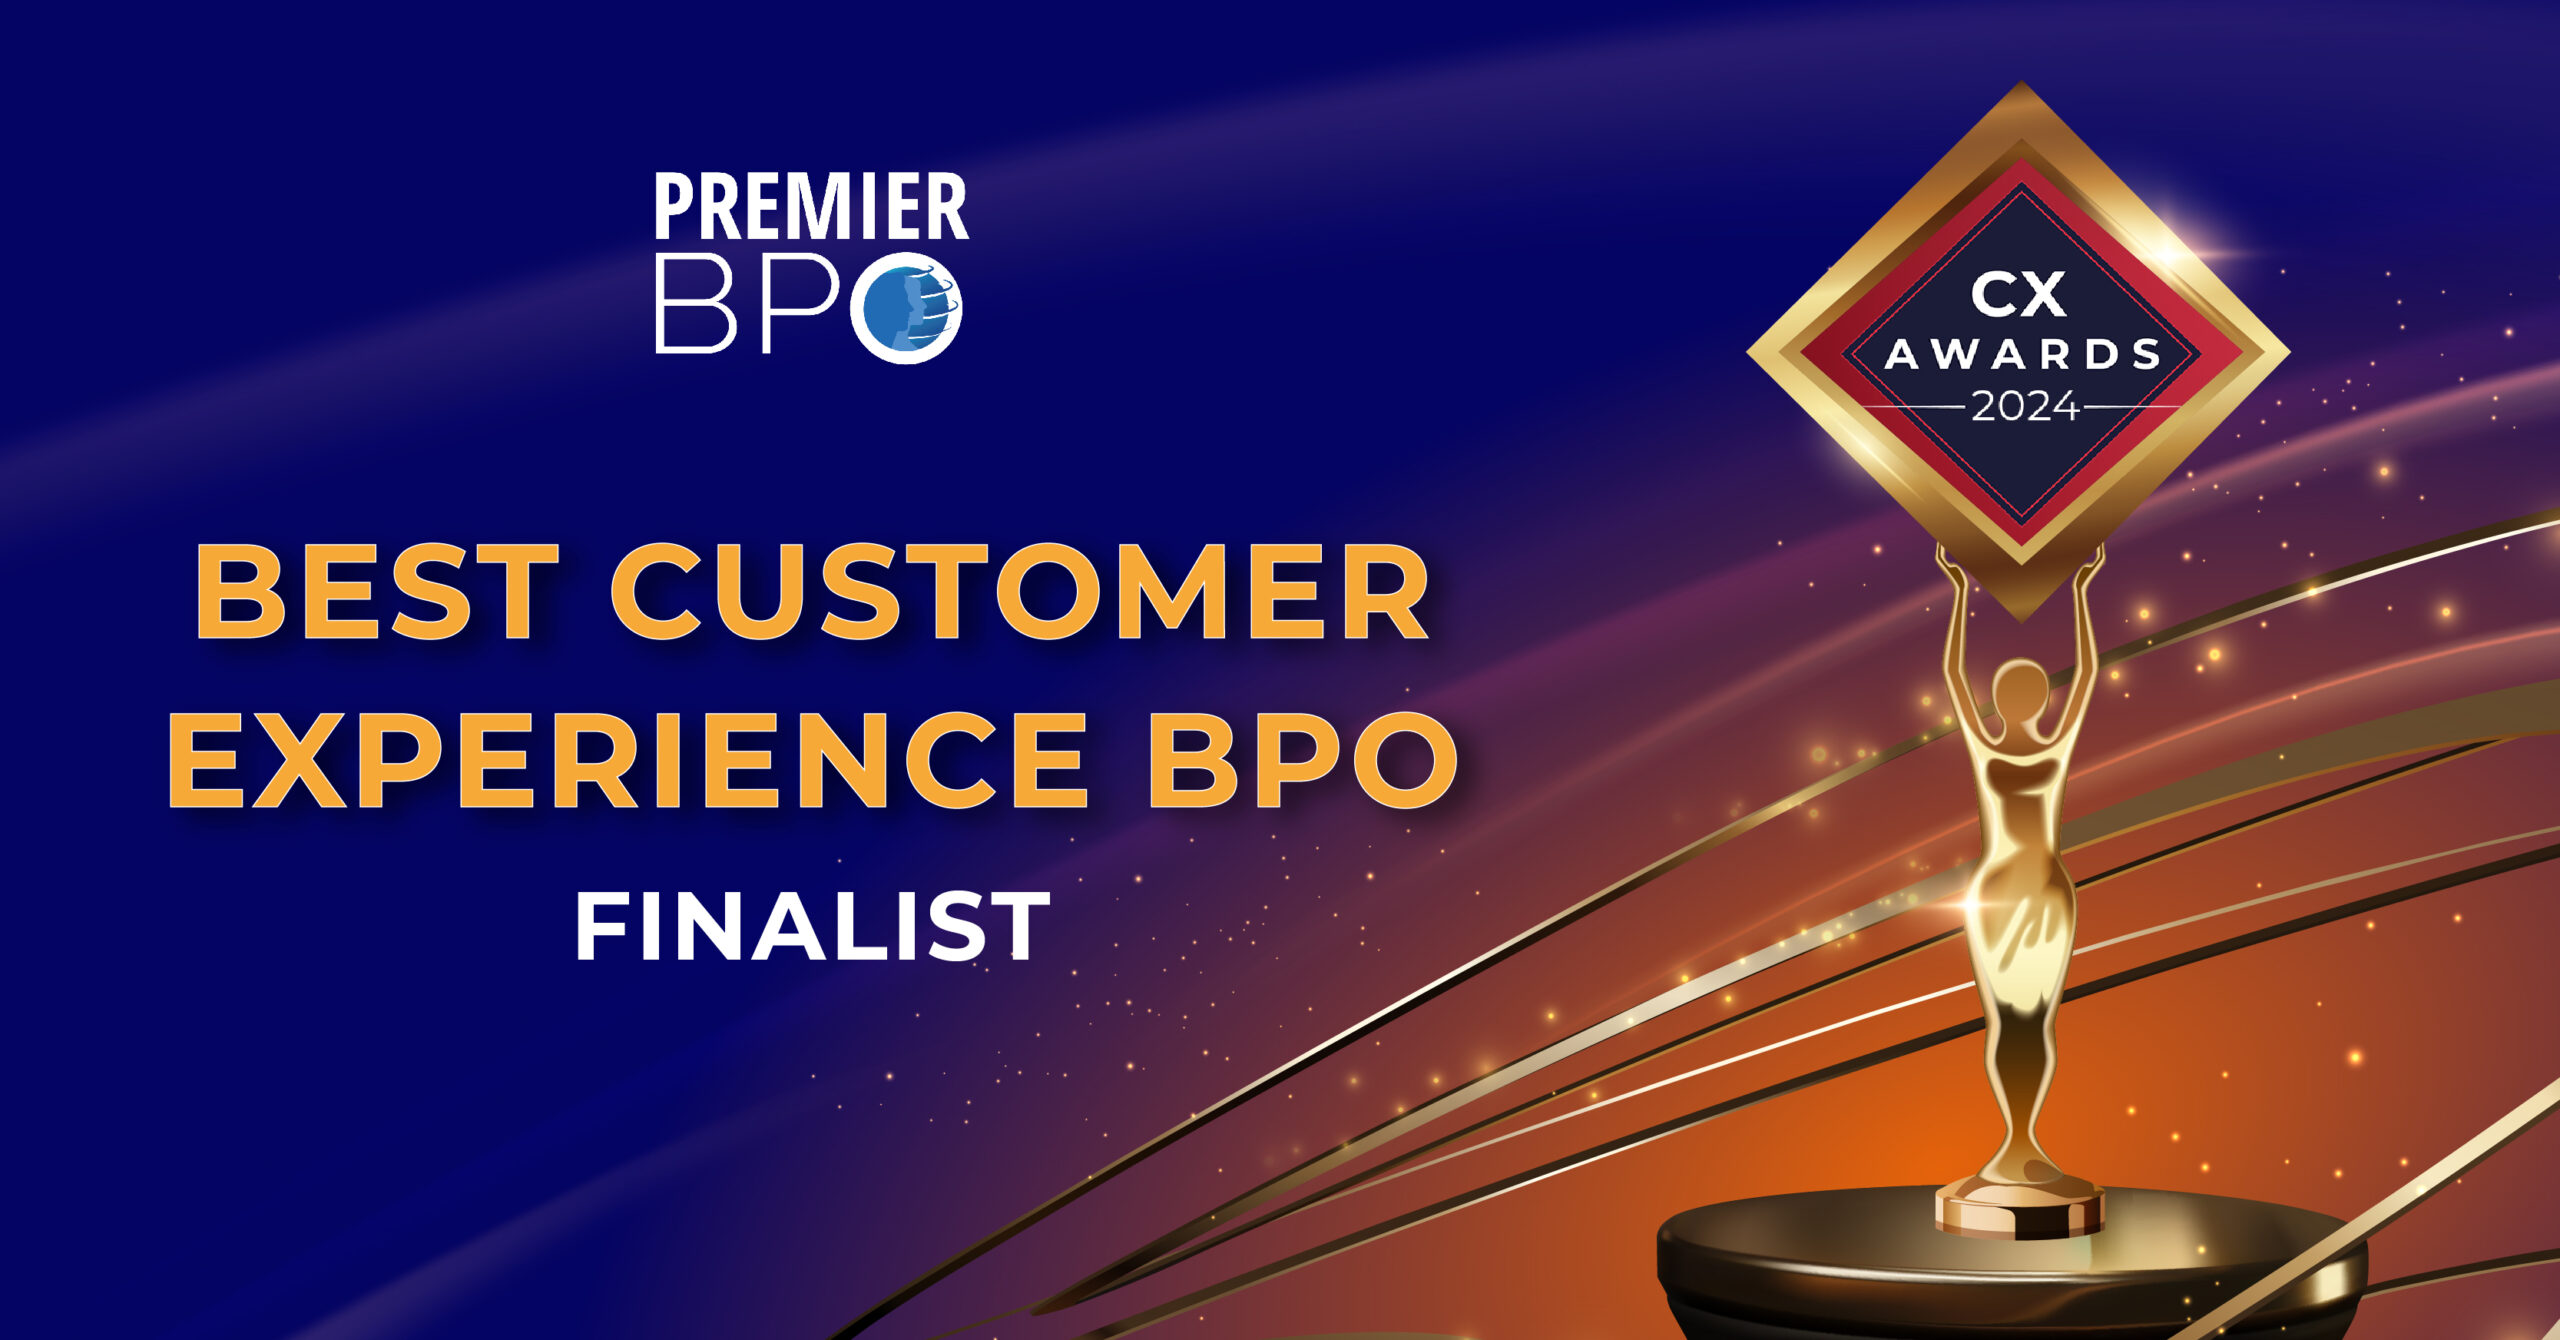 Premier BPO Identified as Leader in Customer Experience